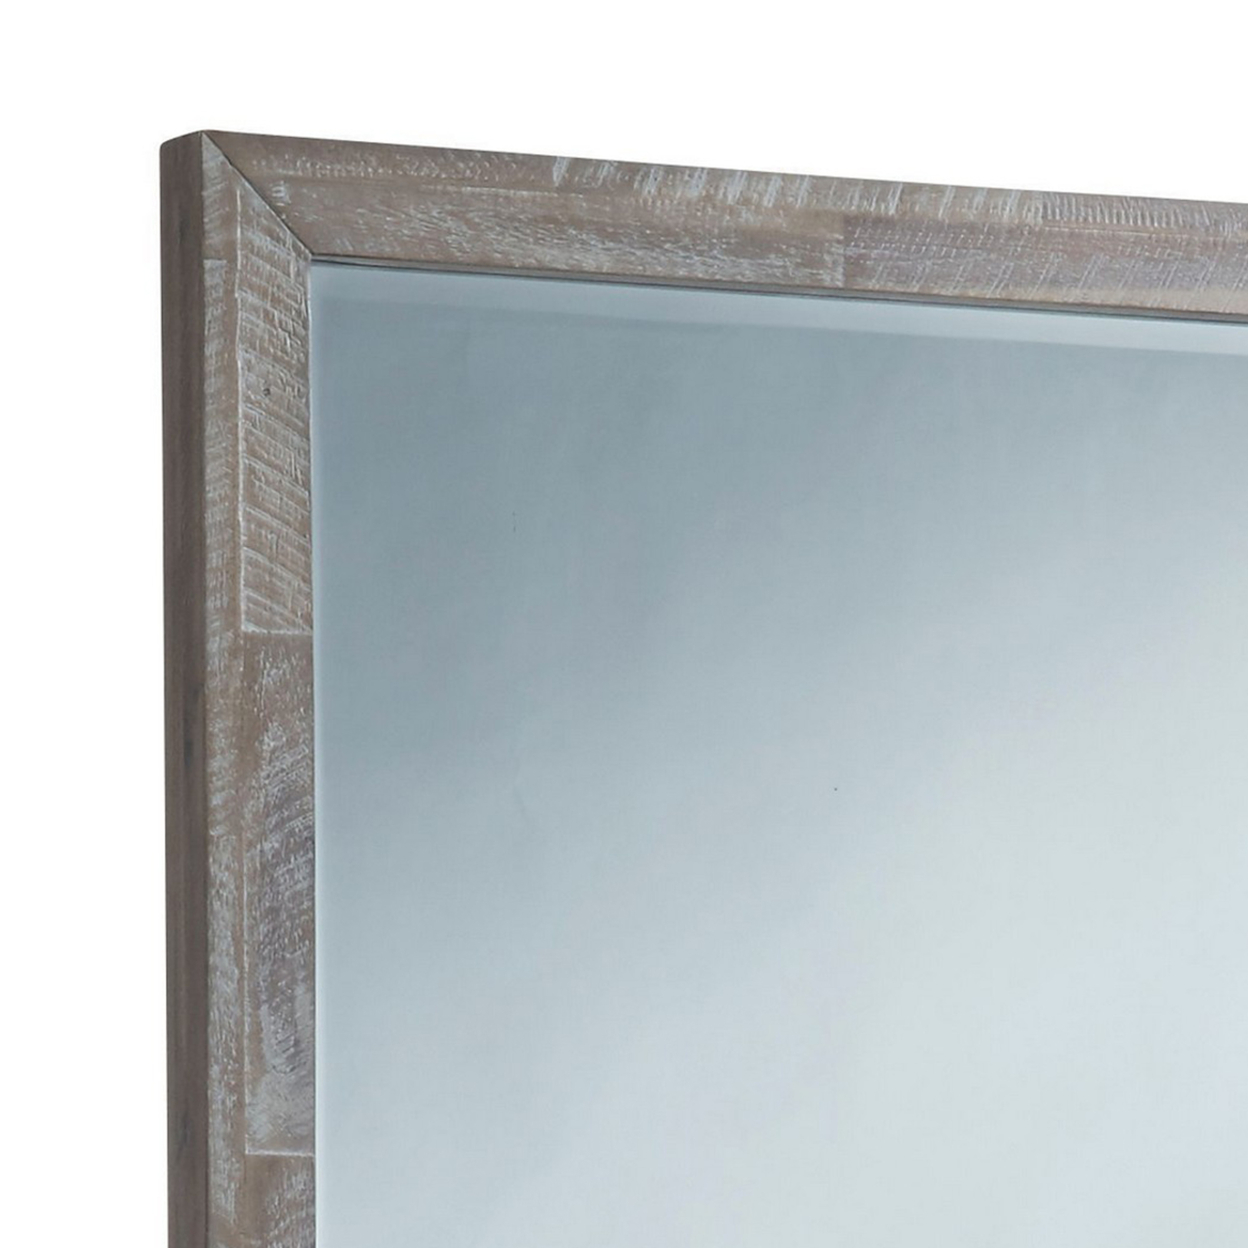 48 Inch Rectangular Distressed Wooden Frame Mirror, Brown- Saltoro Sherpi